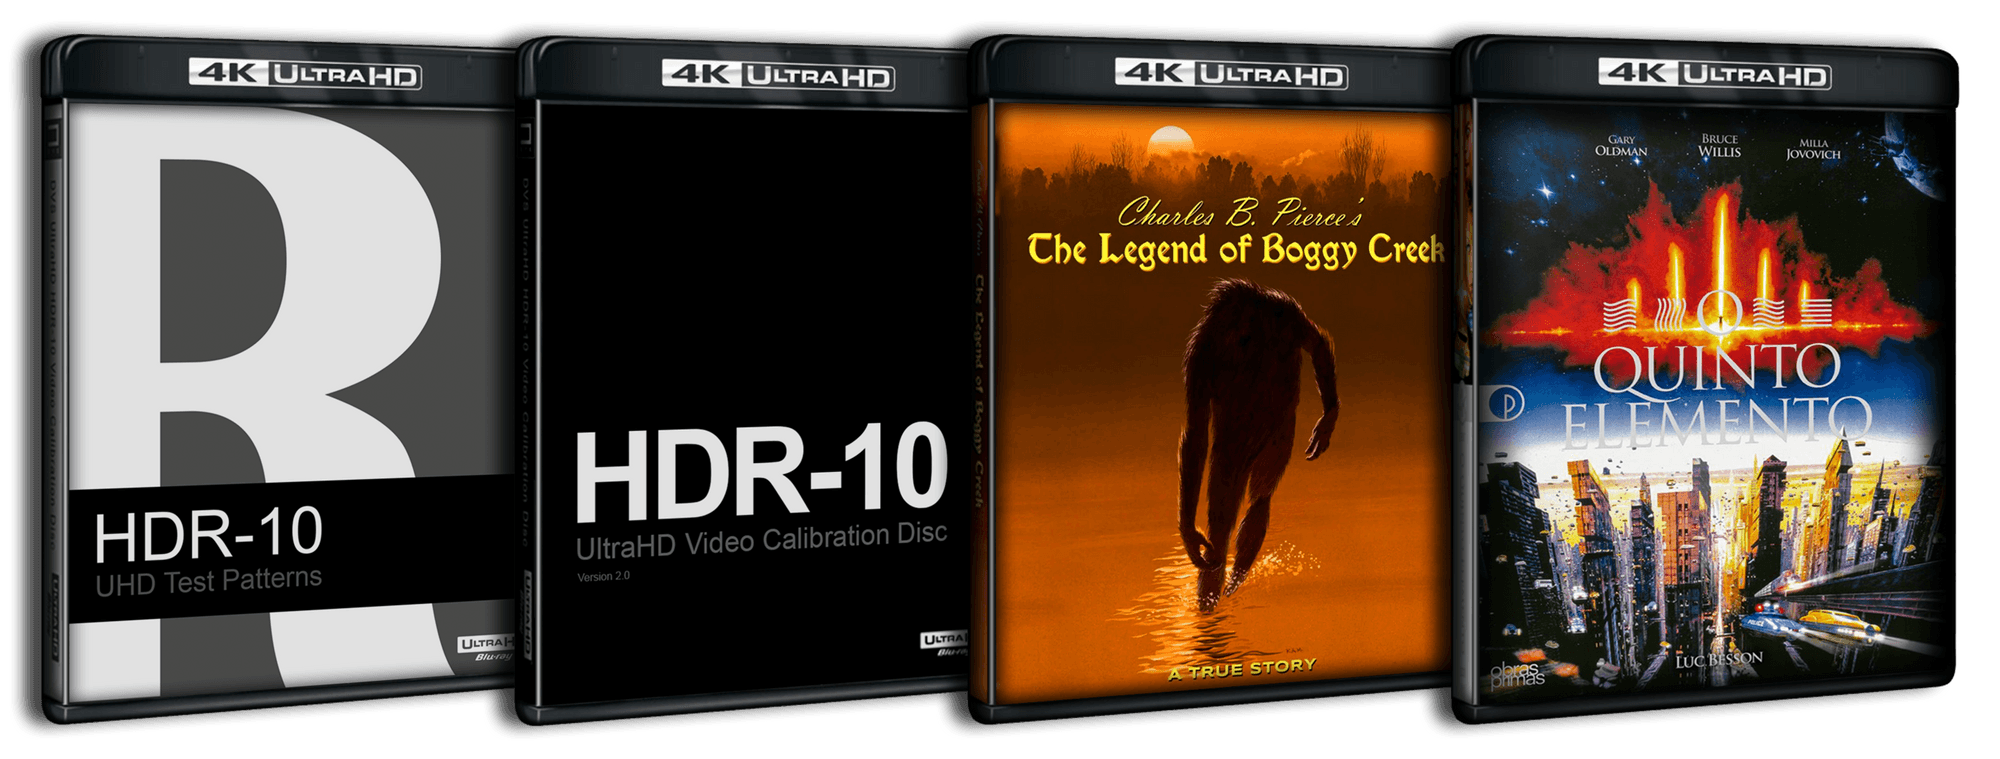 UltraHD 4K Blu-ray Disc Replication